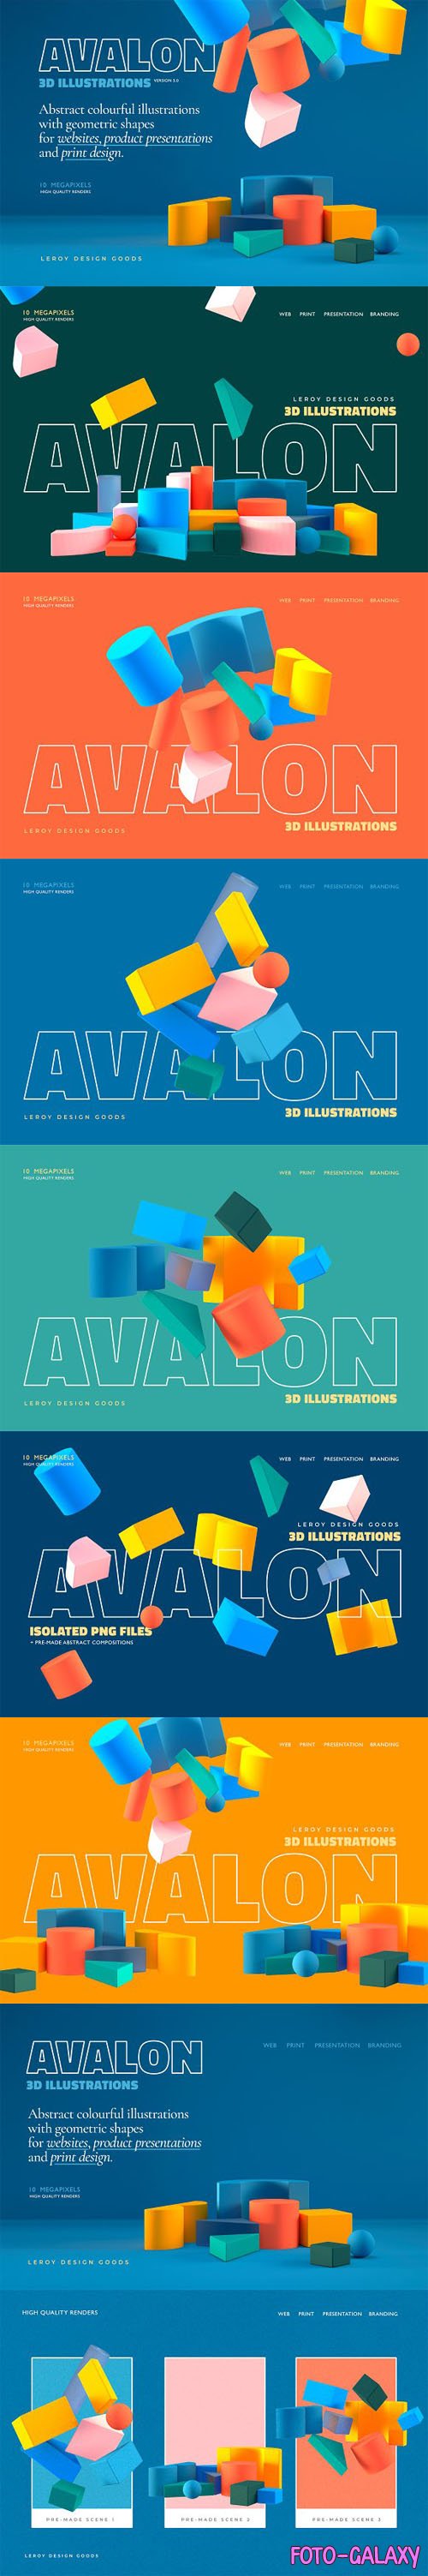 AVALON - 3D Abstract Shapes Illustrations v5